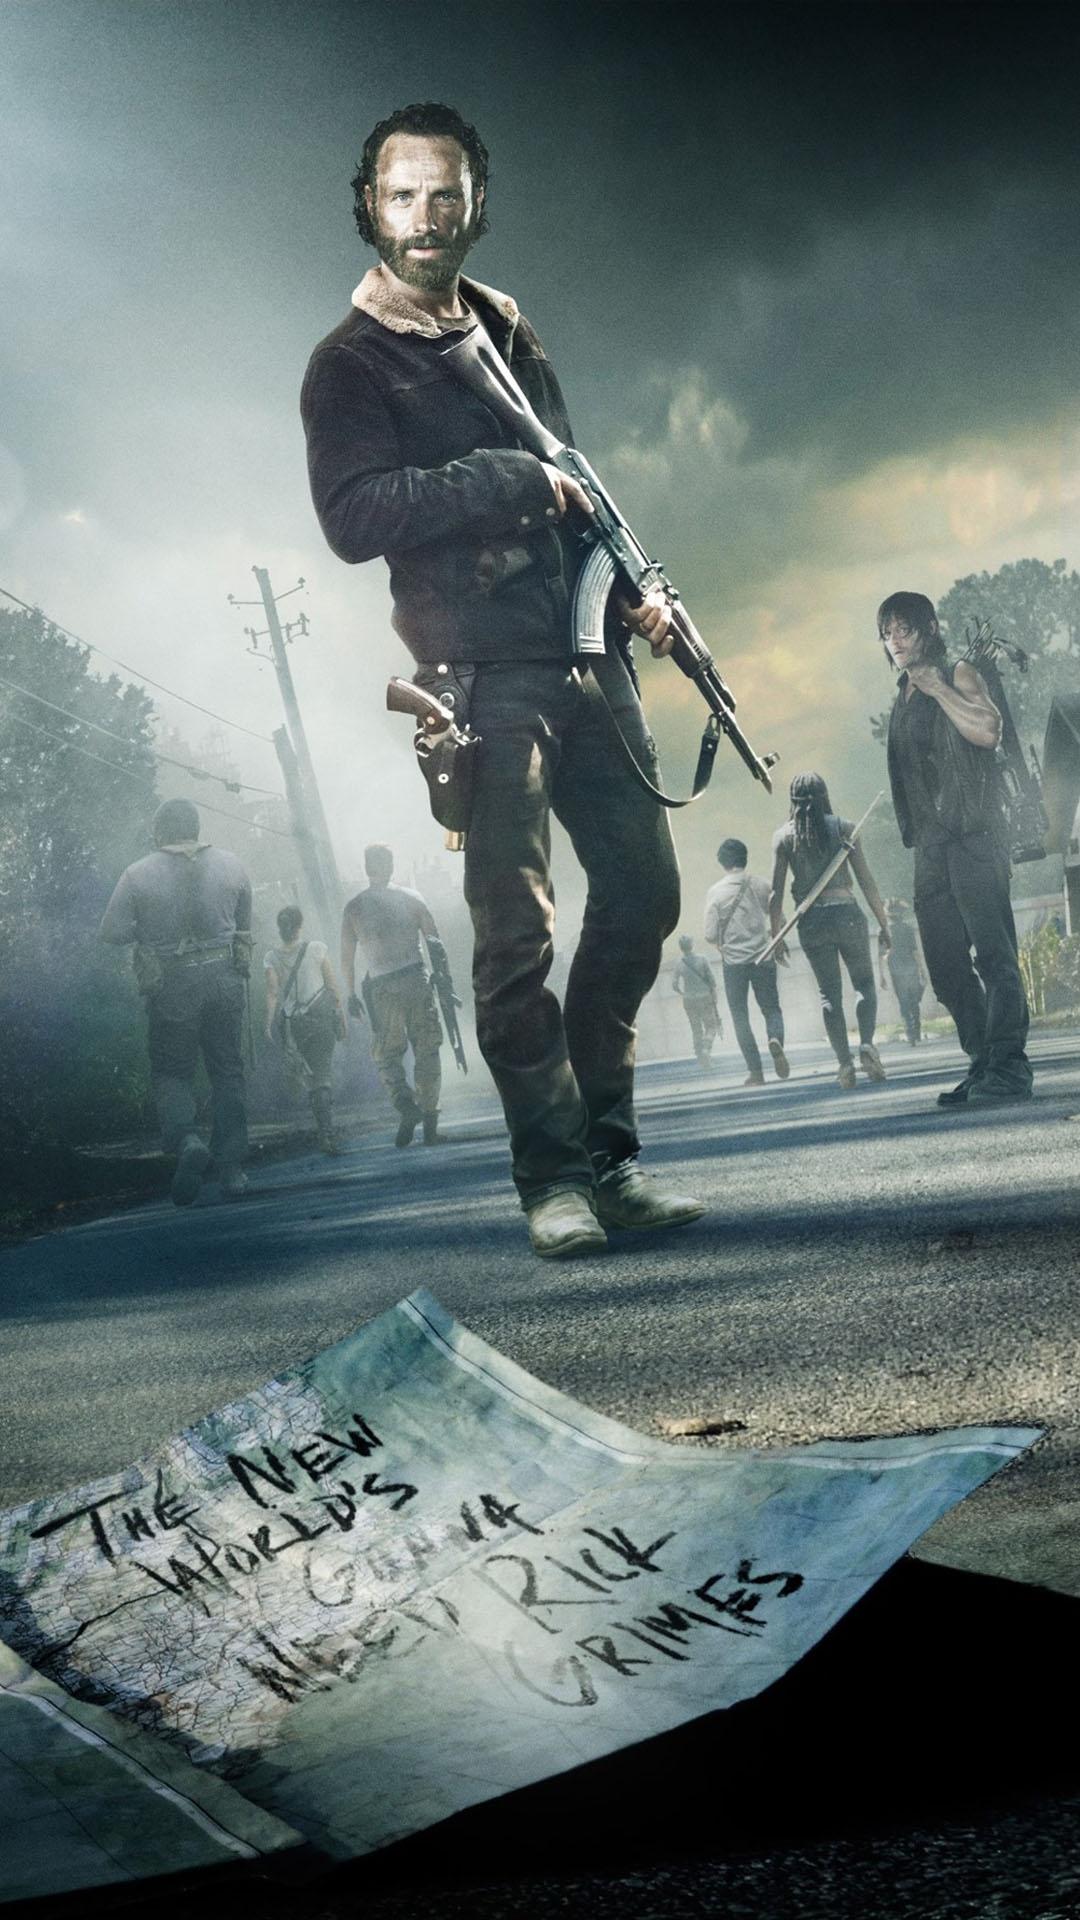 1080x1920px The Walking Dead iPhone Wallpaper